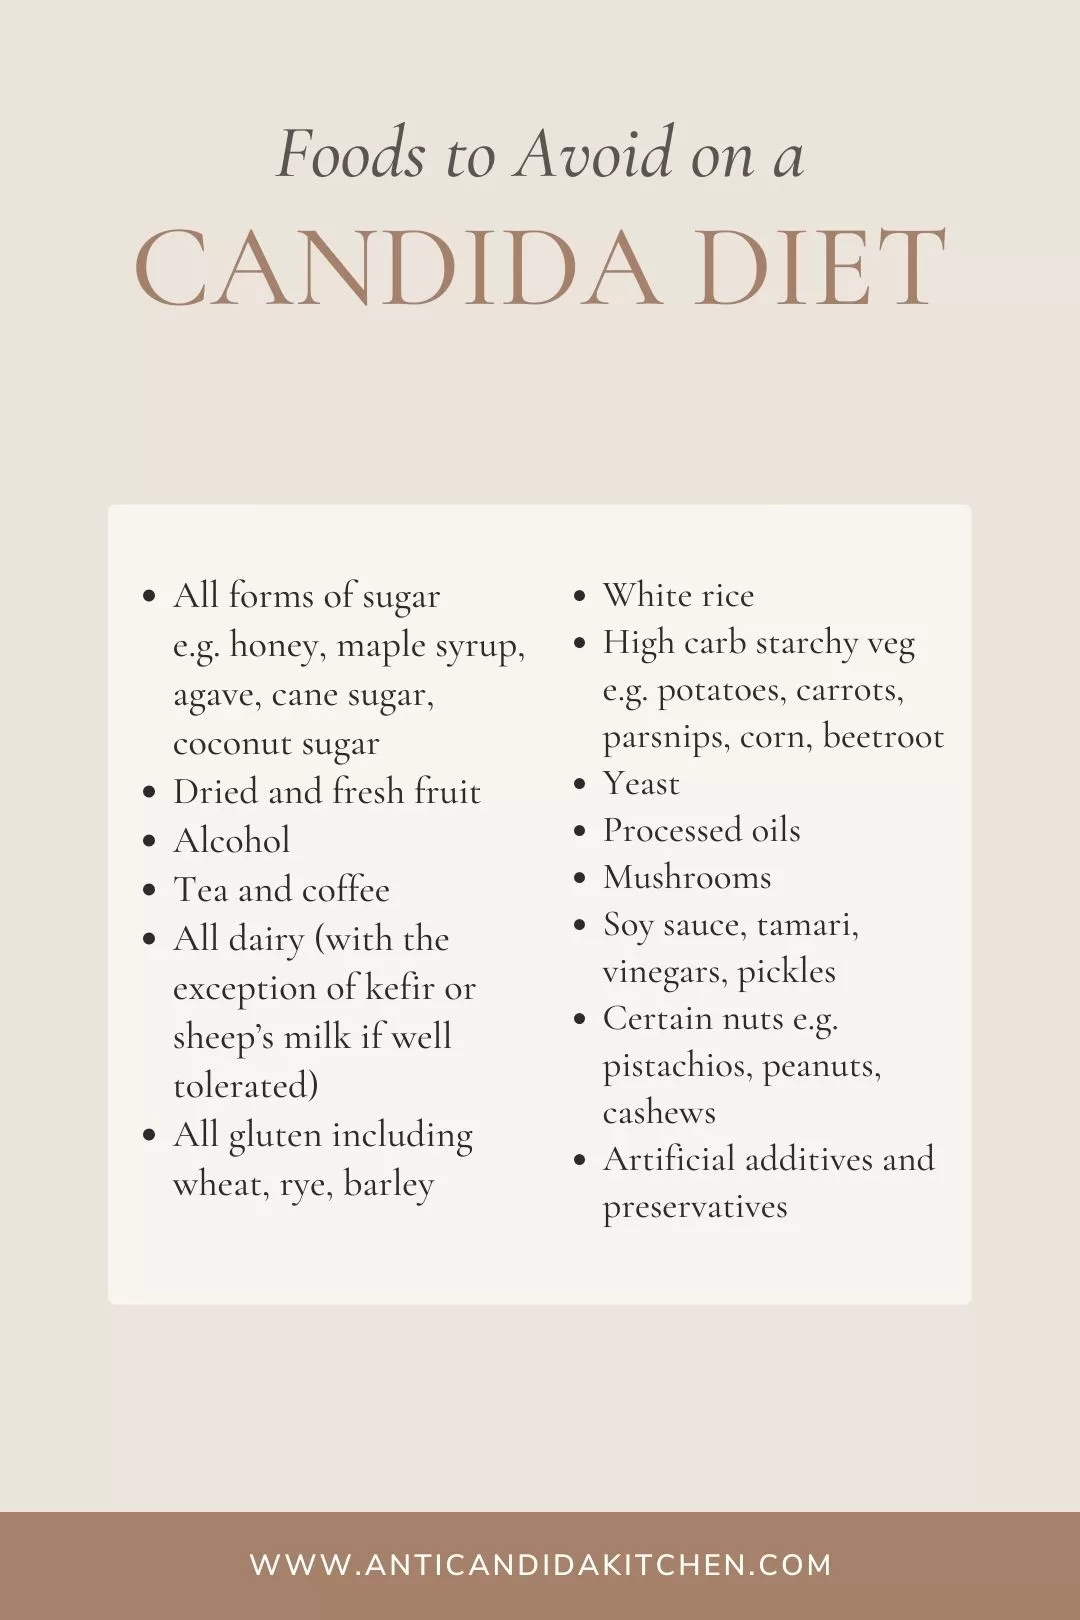 Candida Diet Food List PDF - Foods to Avoid